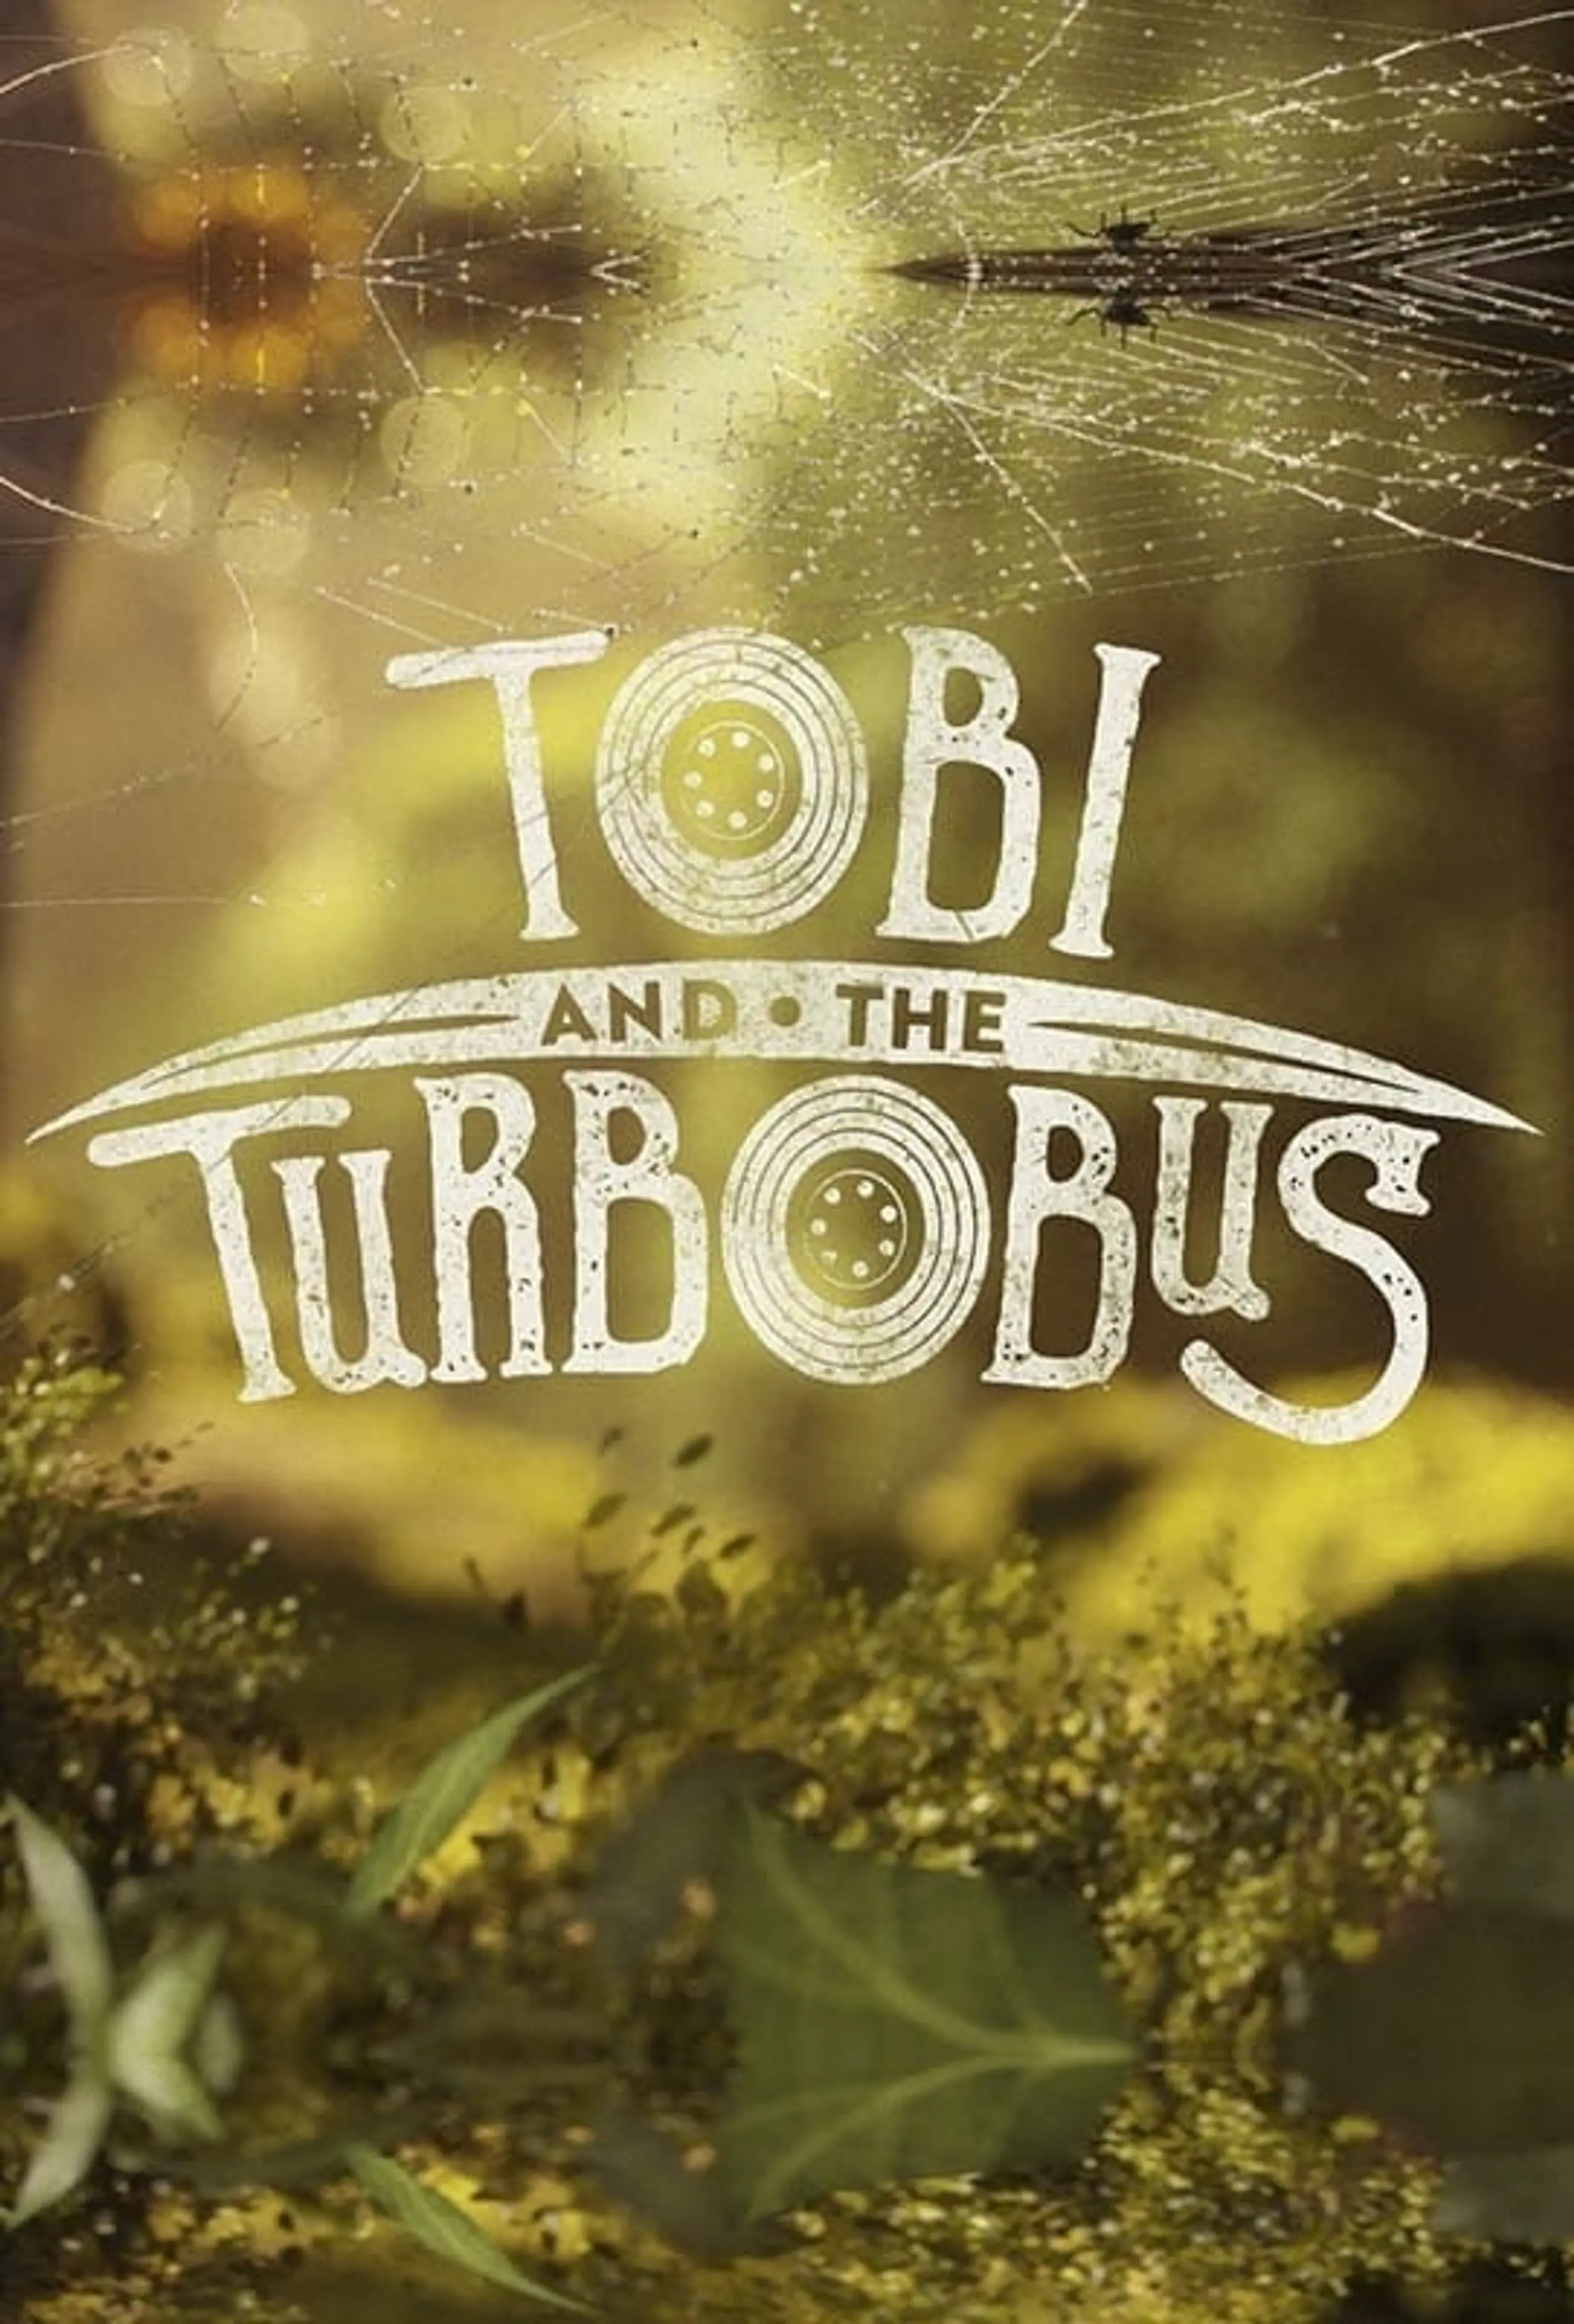 Tobi and the Turbobus